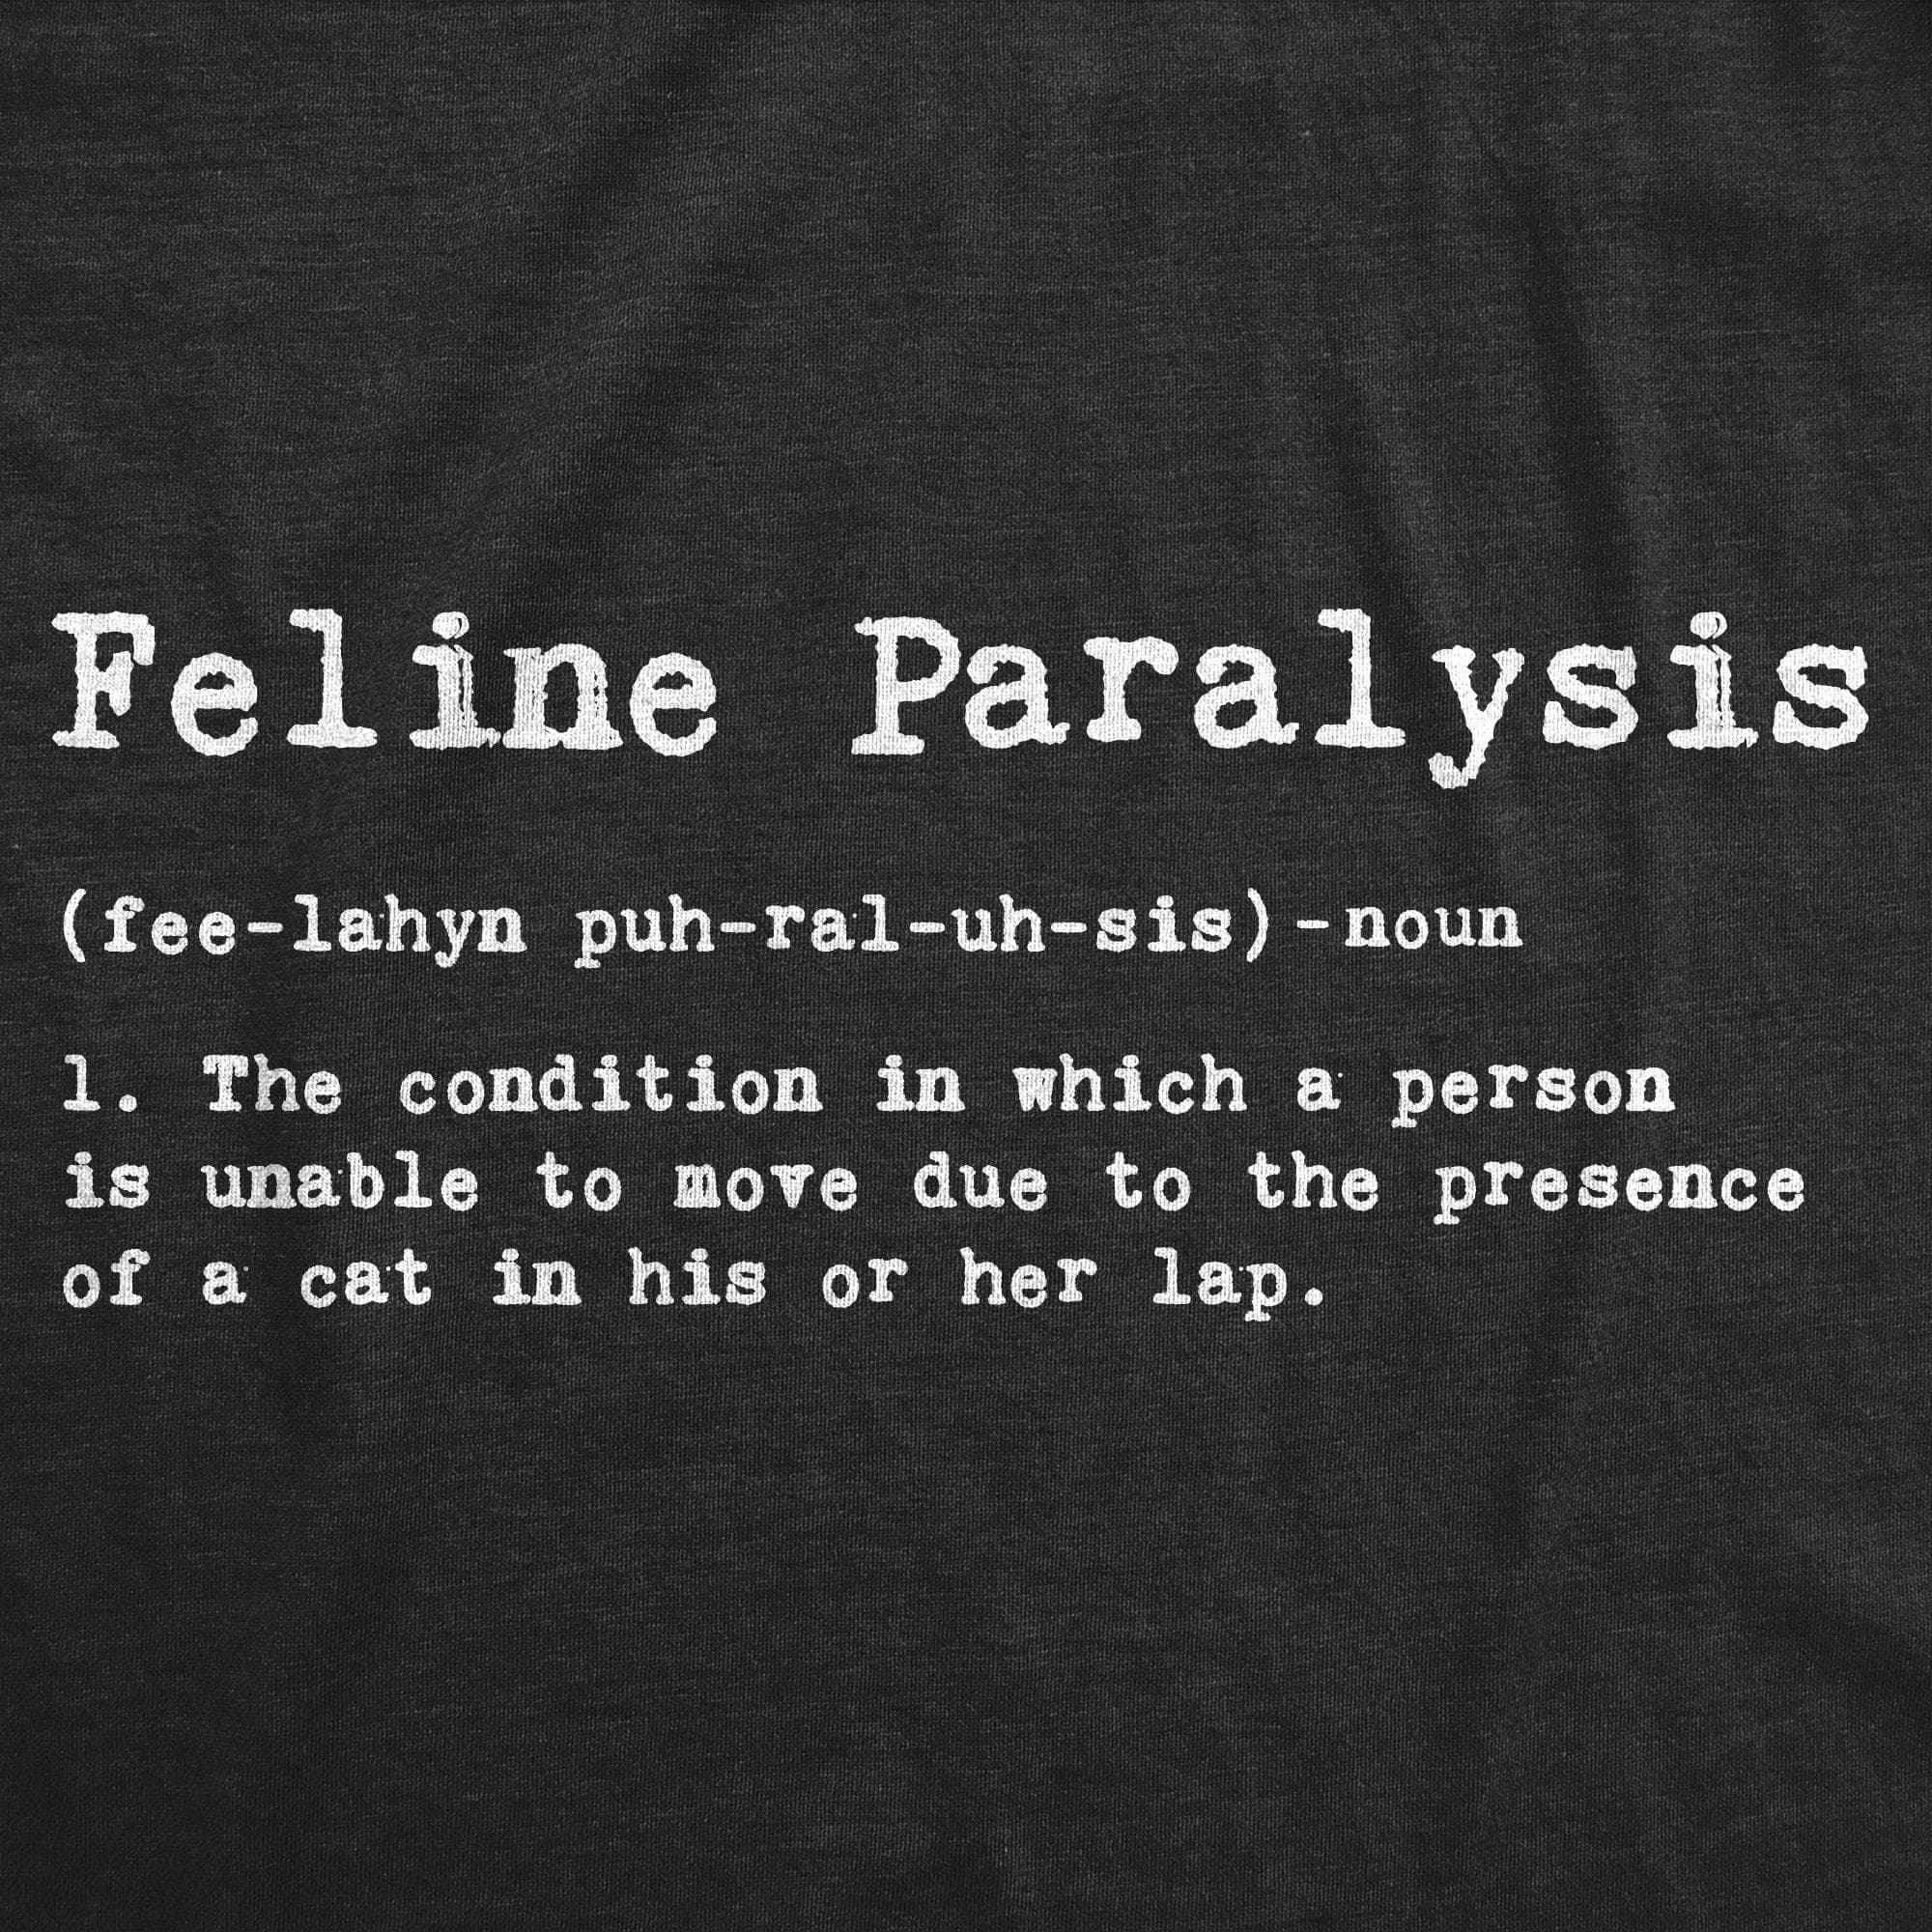 Feline Paralysis Men's Tshirt - Crazy Dog T-Shirts